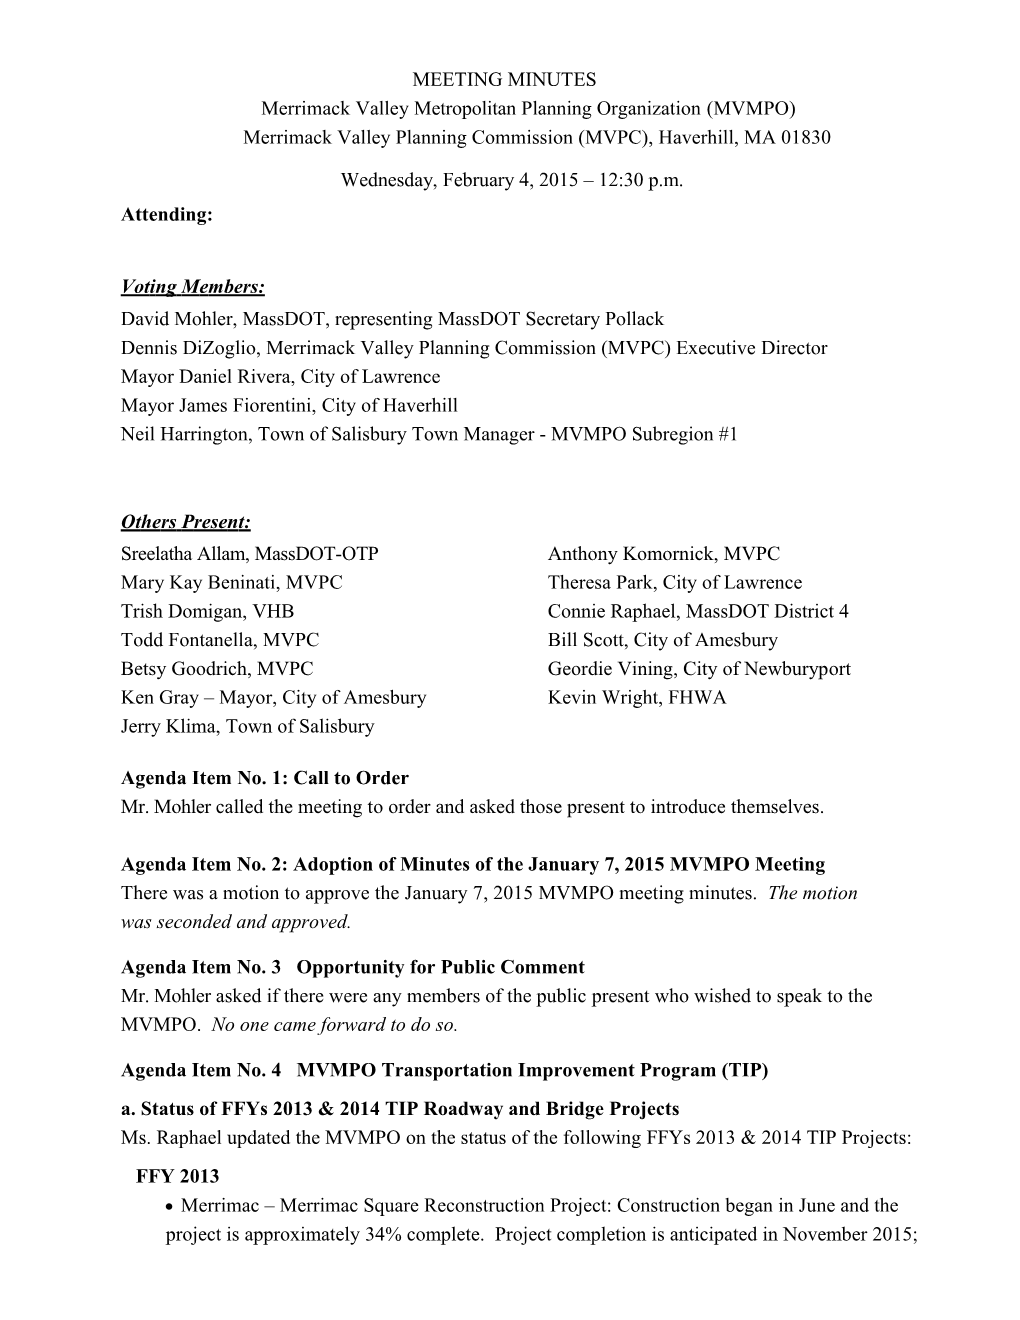 Minutes of February 4, 2015 MVMPO Meeting